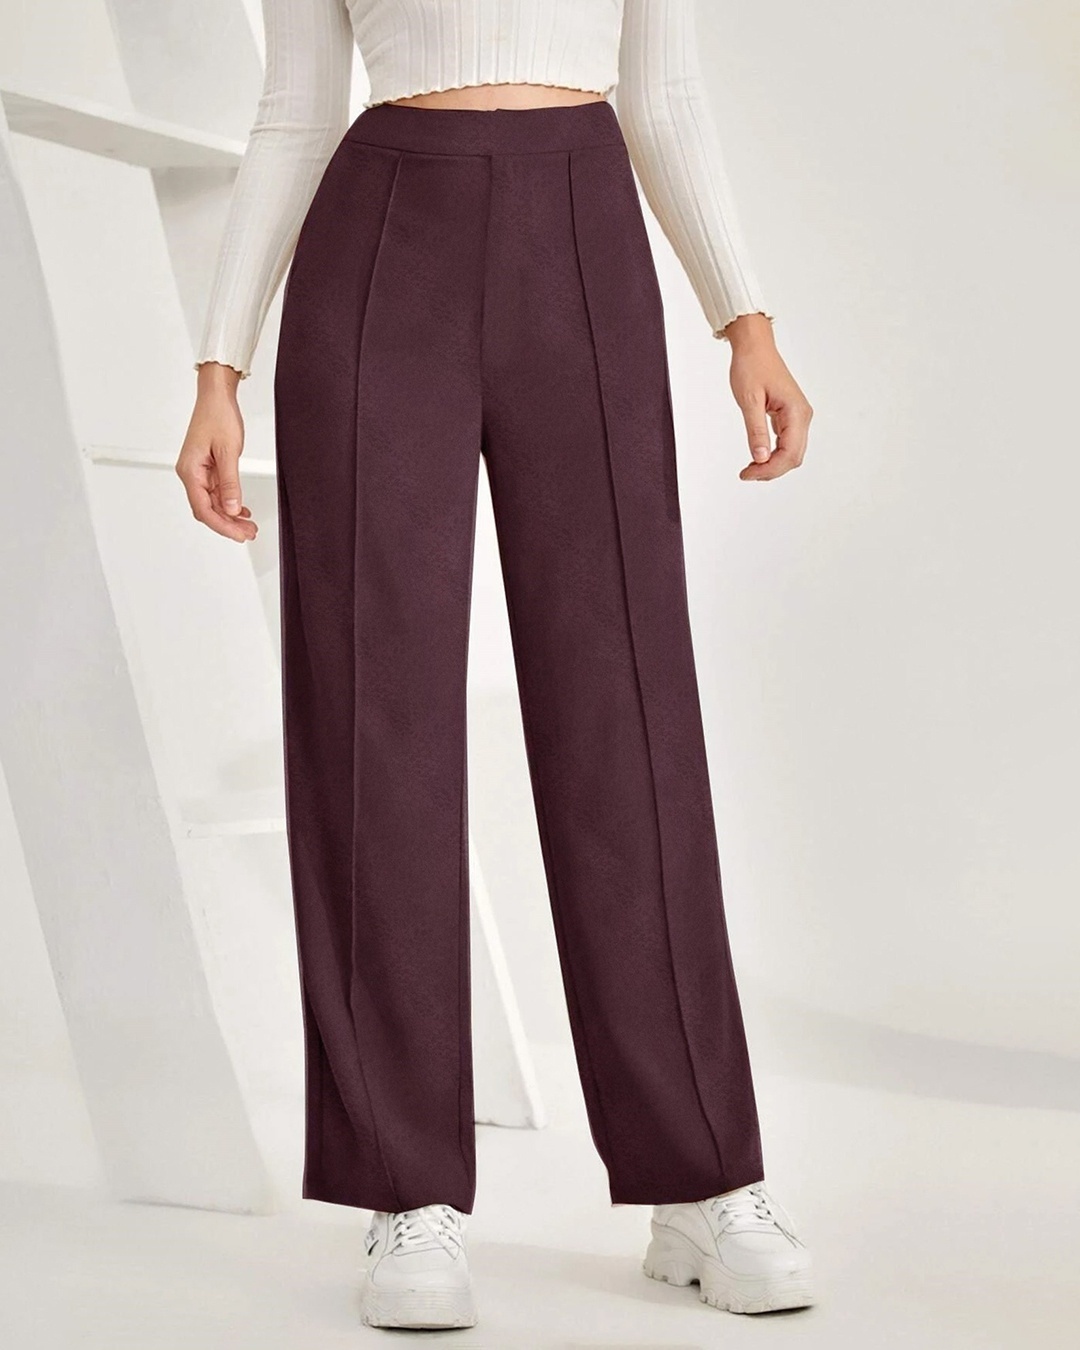 Buy YURIS Maroon Solid Regular Fit Cotton Women's Western Trousers |  Shoppers Stop